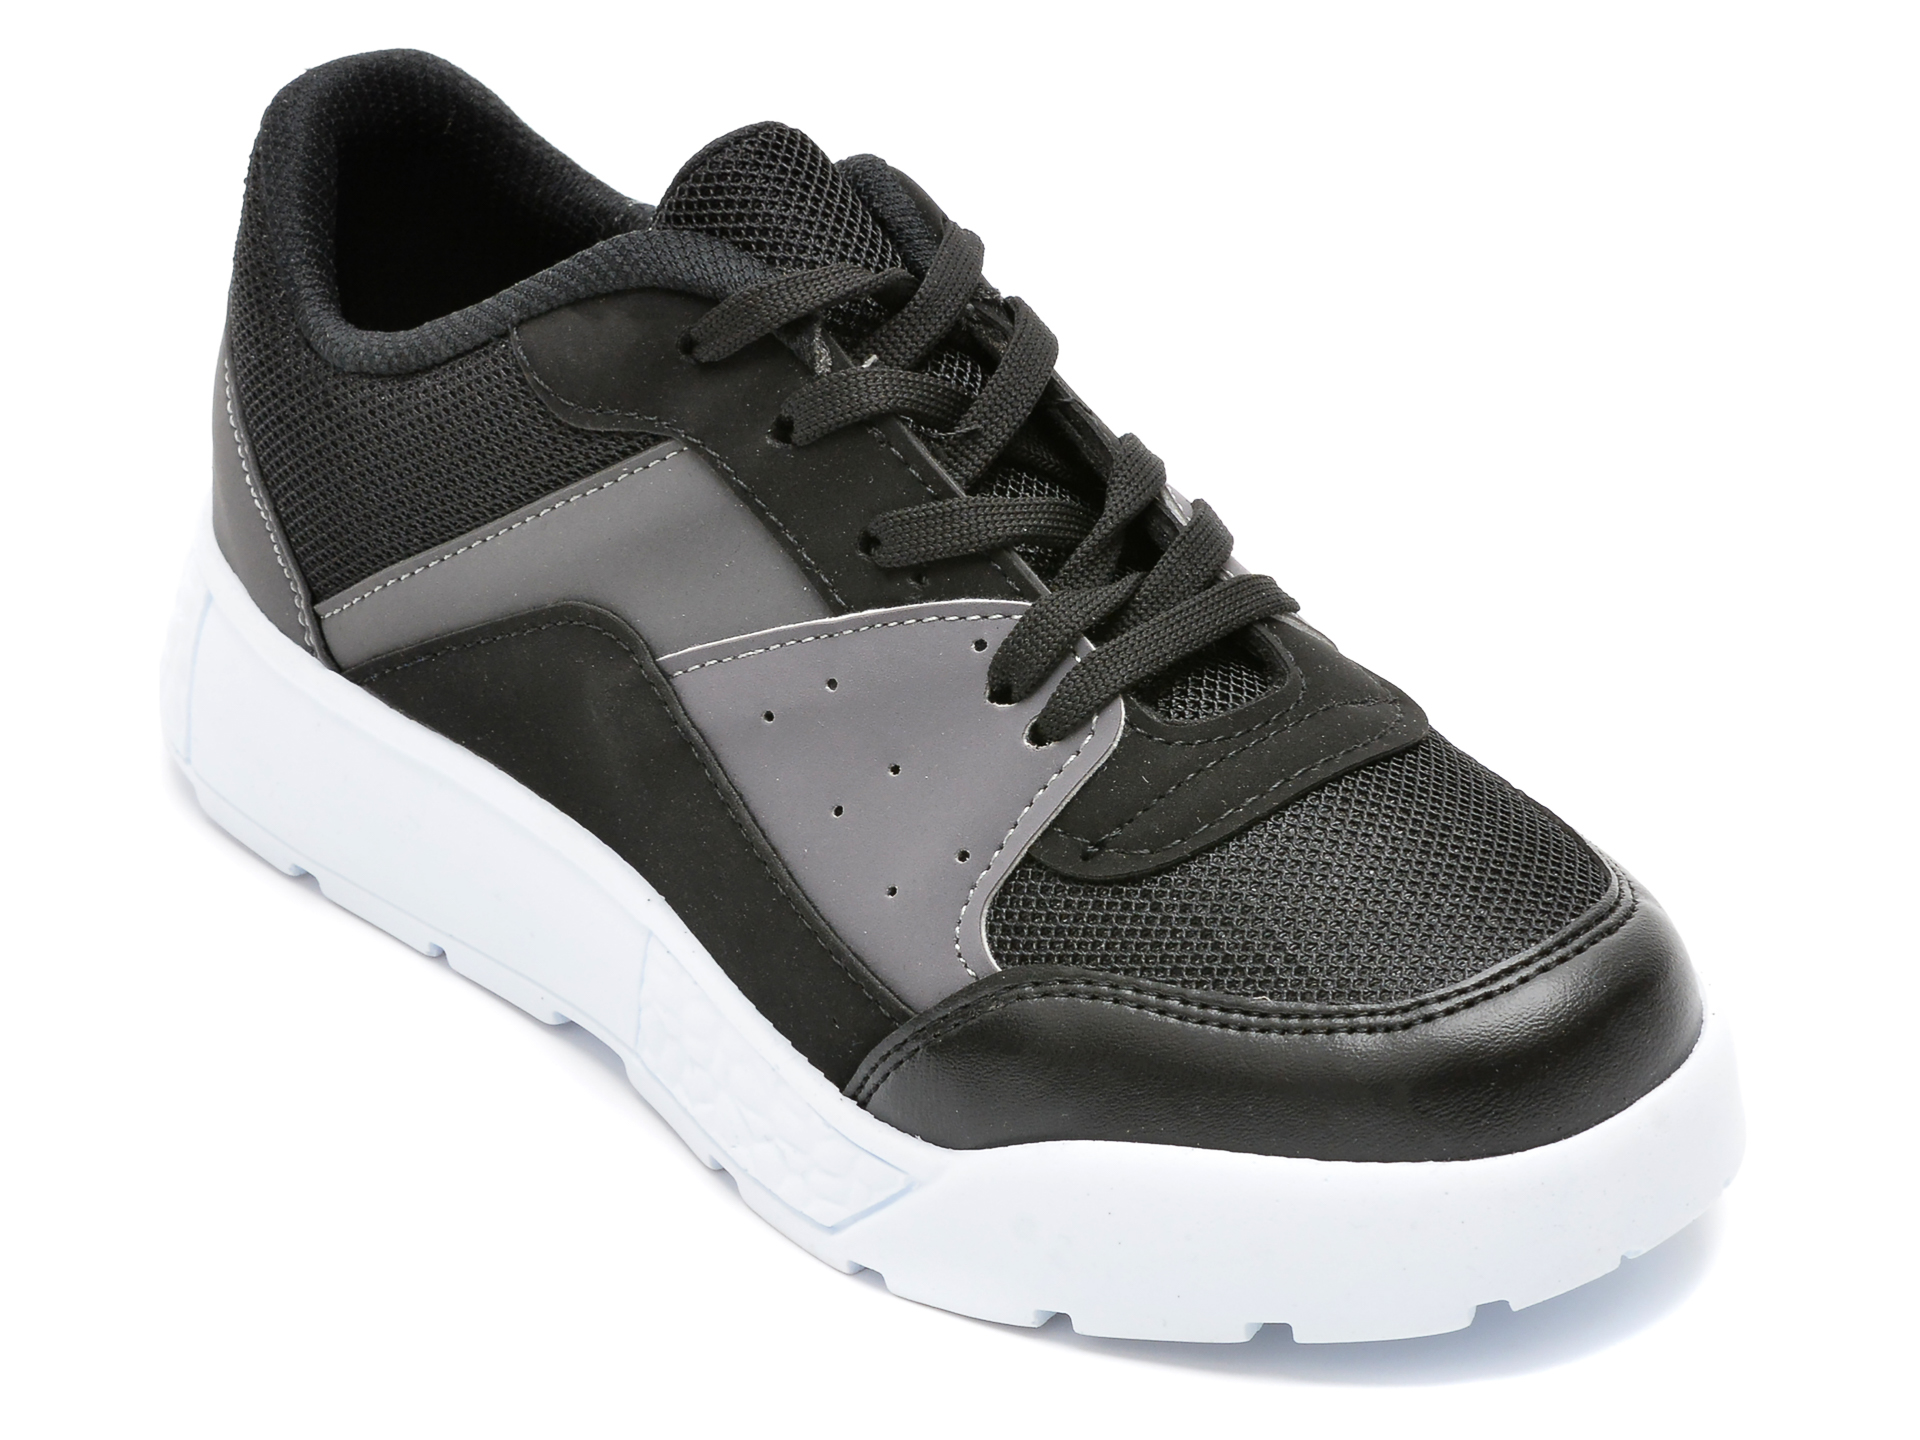 Pantofi sport POLARIS negri, 520237, din material textil si piele ecologica /copii/incaltaminte